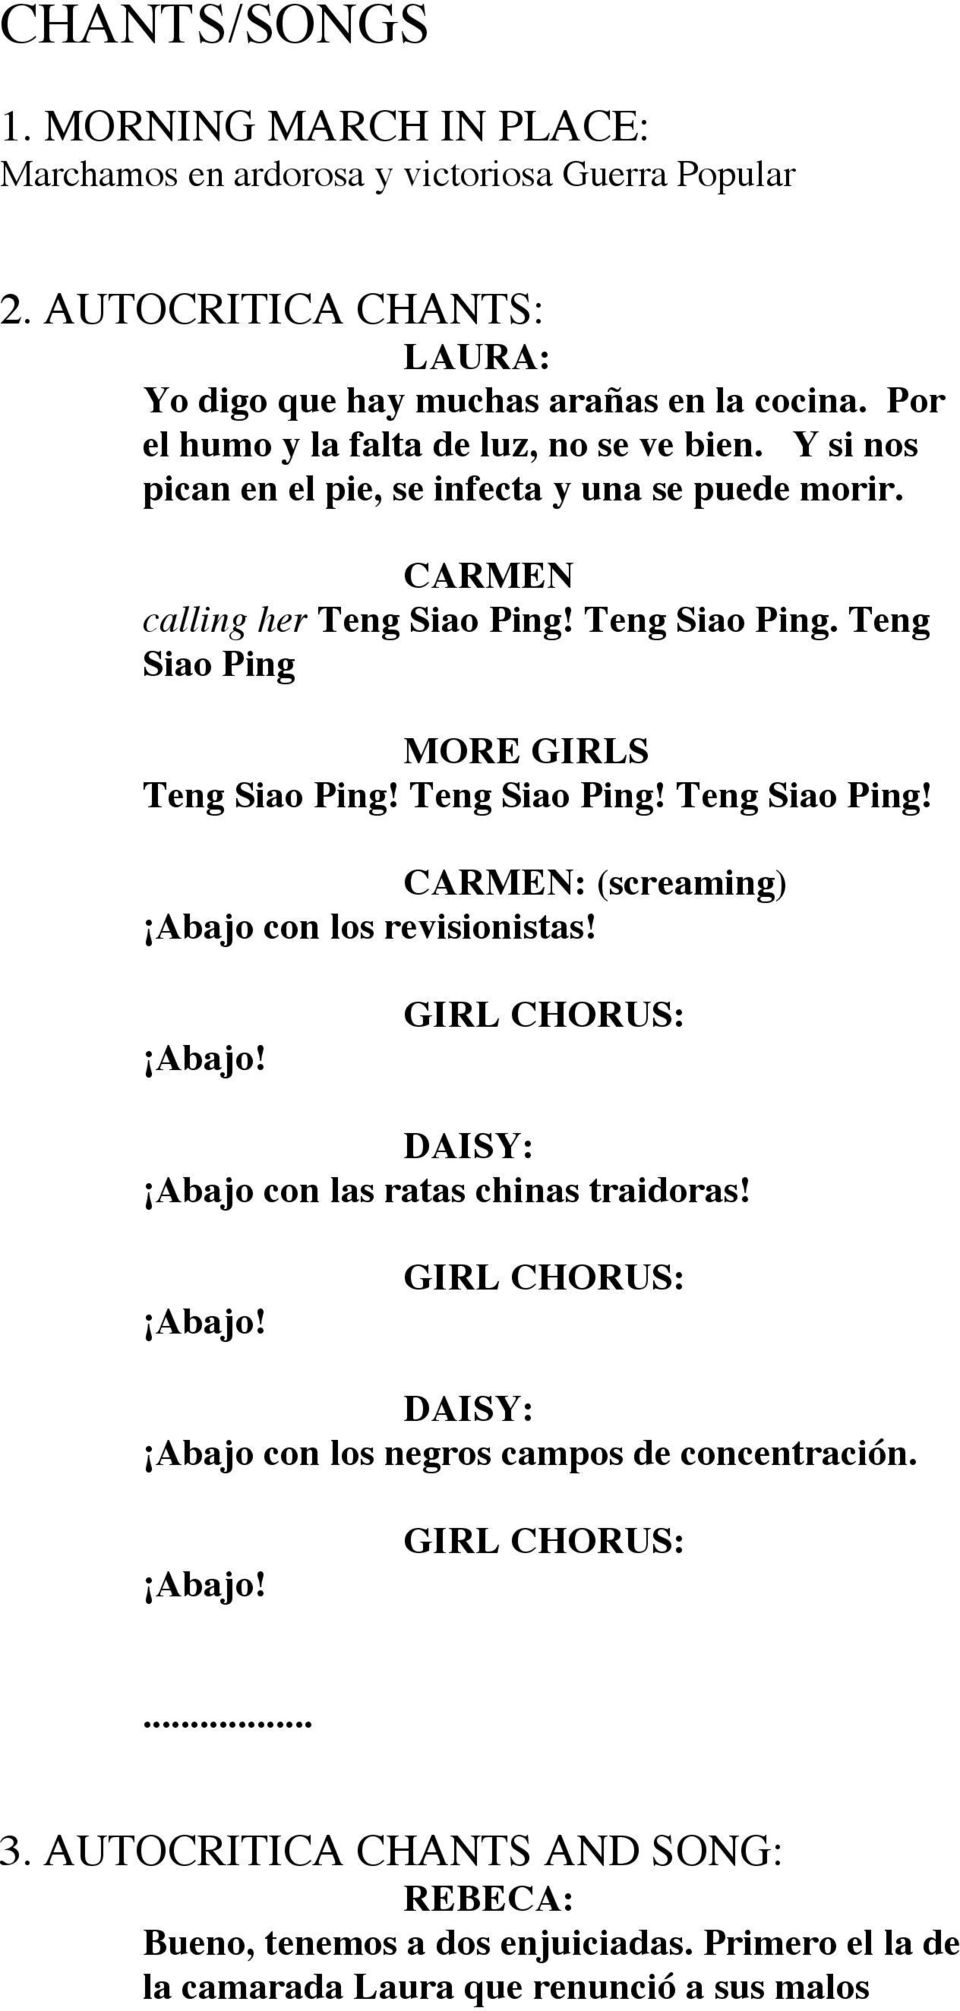 Teng Siao Ping. Teng Siao Ping MORE GIRLS Teng Siao Ping! Teng Siao Ping! Teng Siao Ping! CARMEN: (screaming) Abajo con los revisionistas! Abajo! DAISY: Abajo con las ratas chinas traidoras!